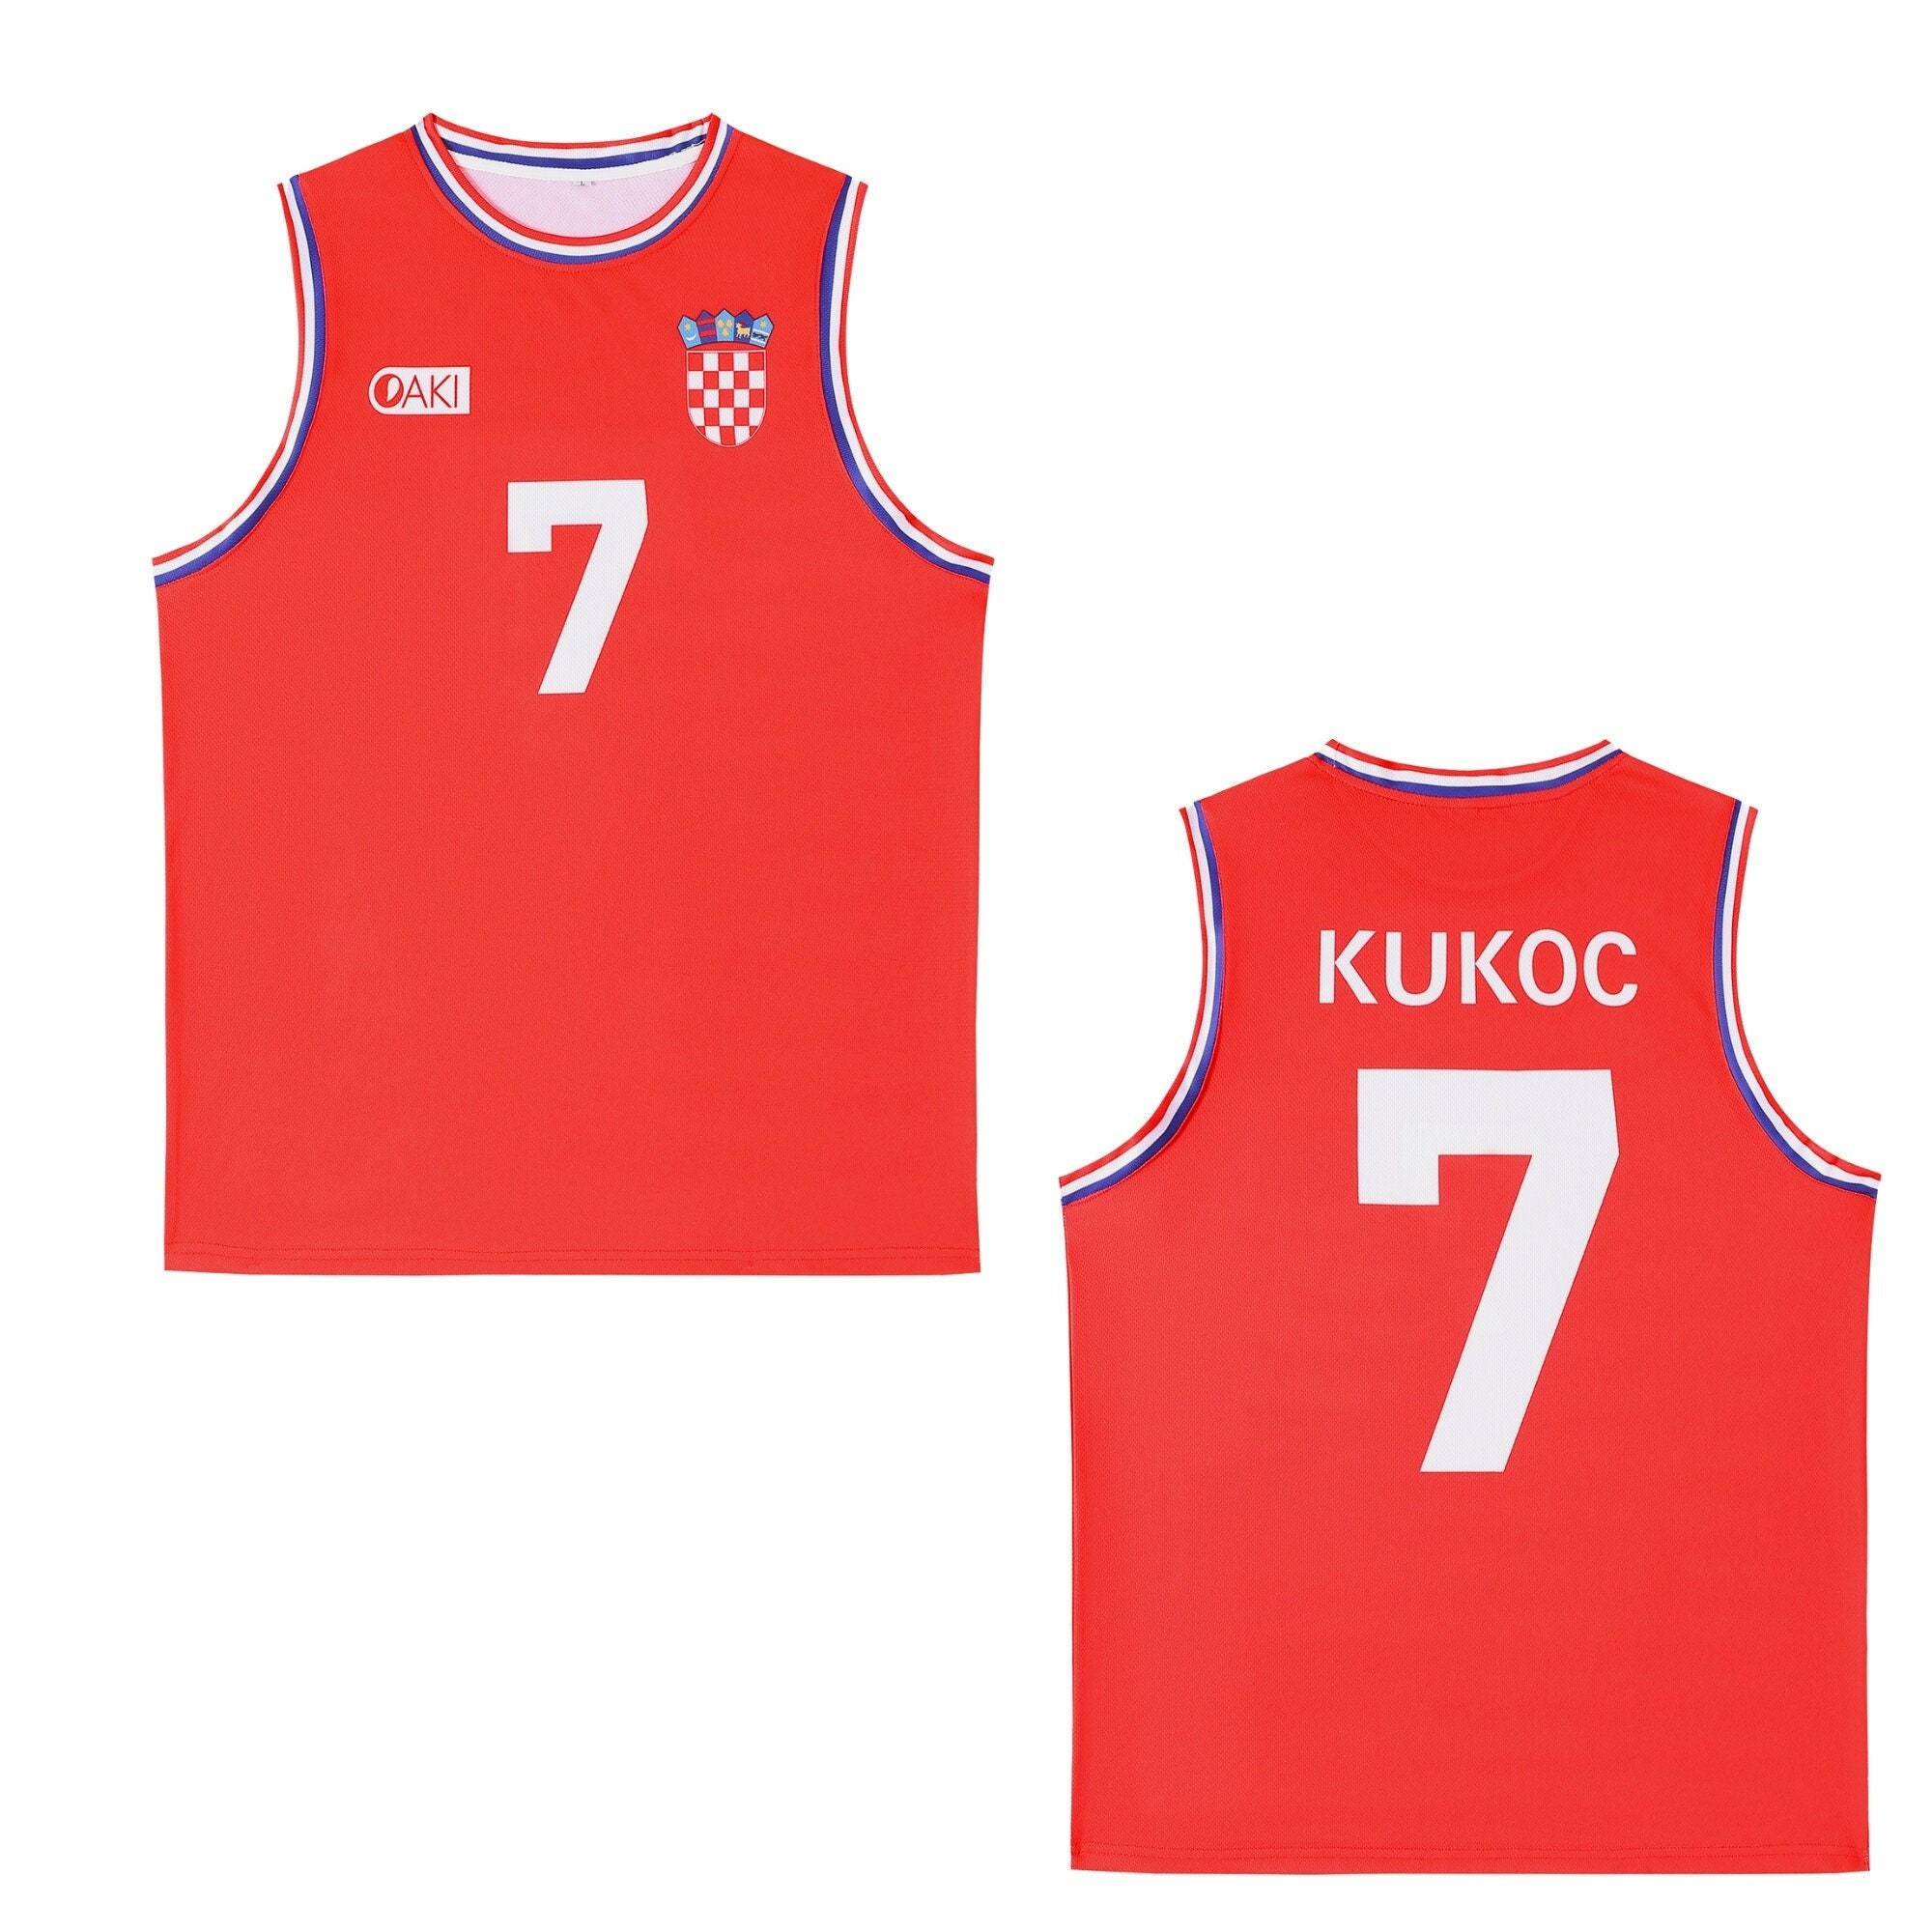 Toni Kukoc HOF 21 Signed Autographed White Custom Basketball Jersey